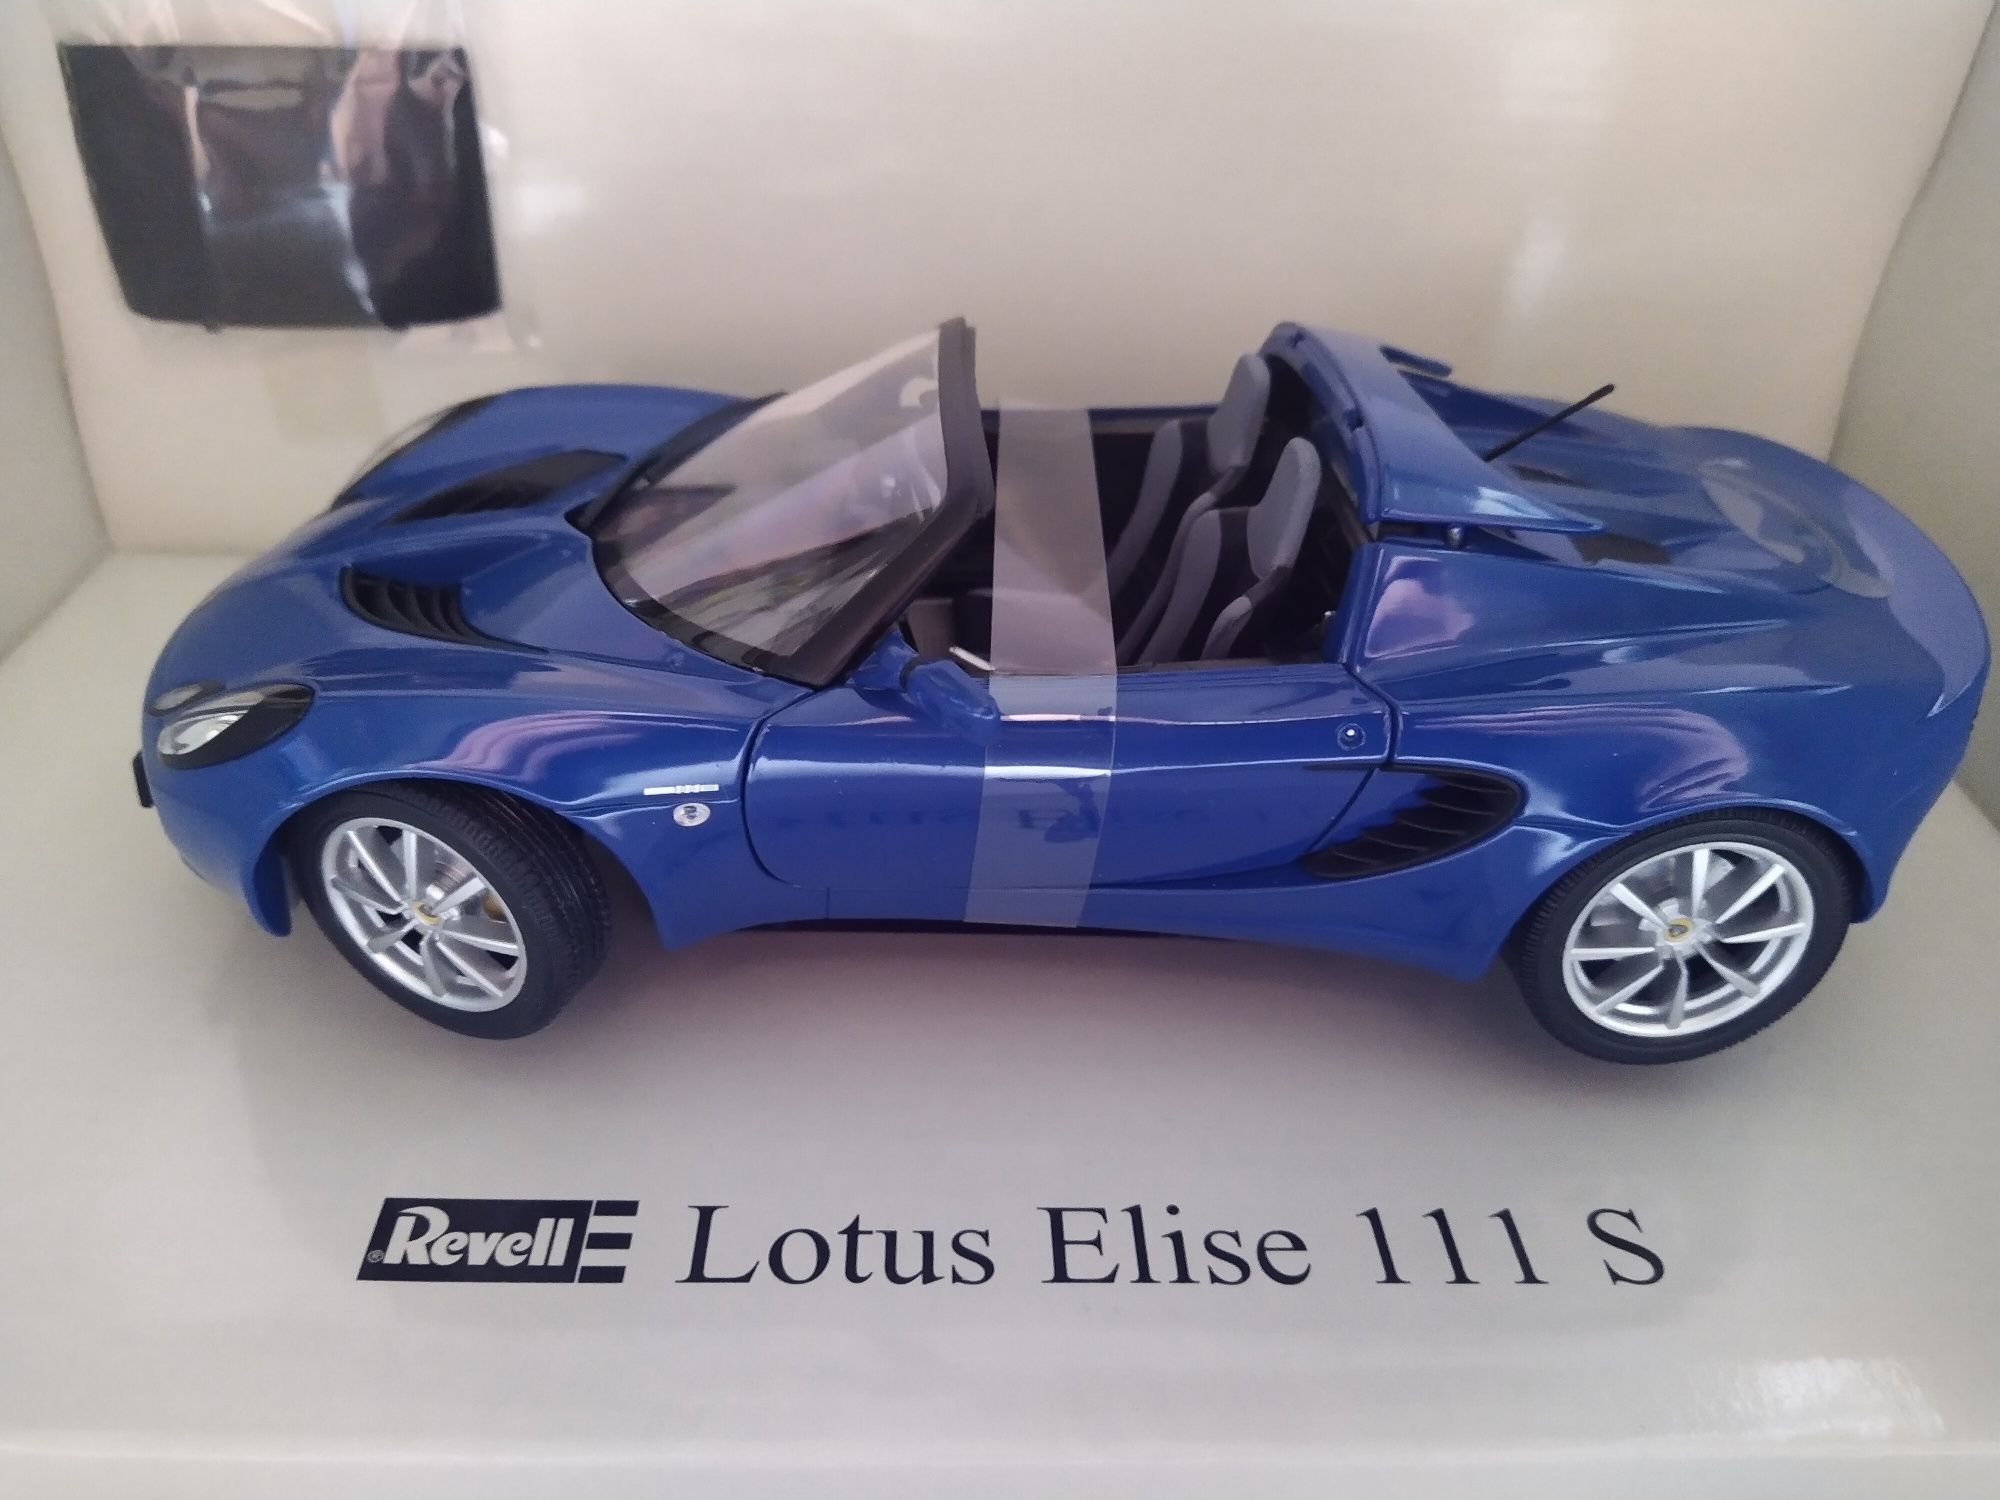 Lotus Elise 111 S Revell 1:18